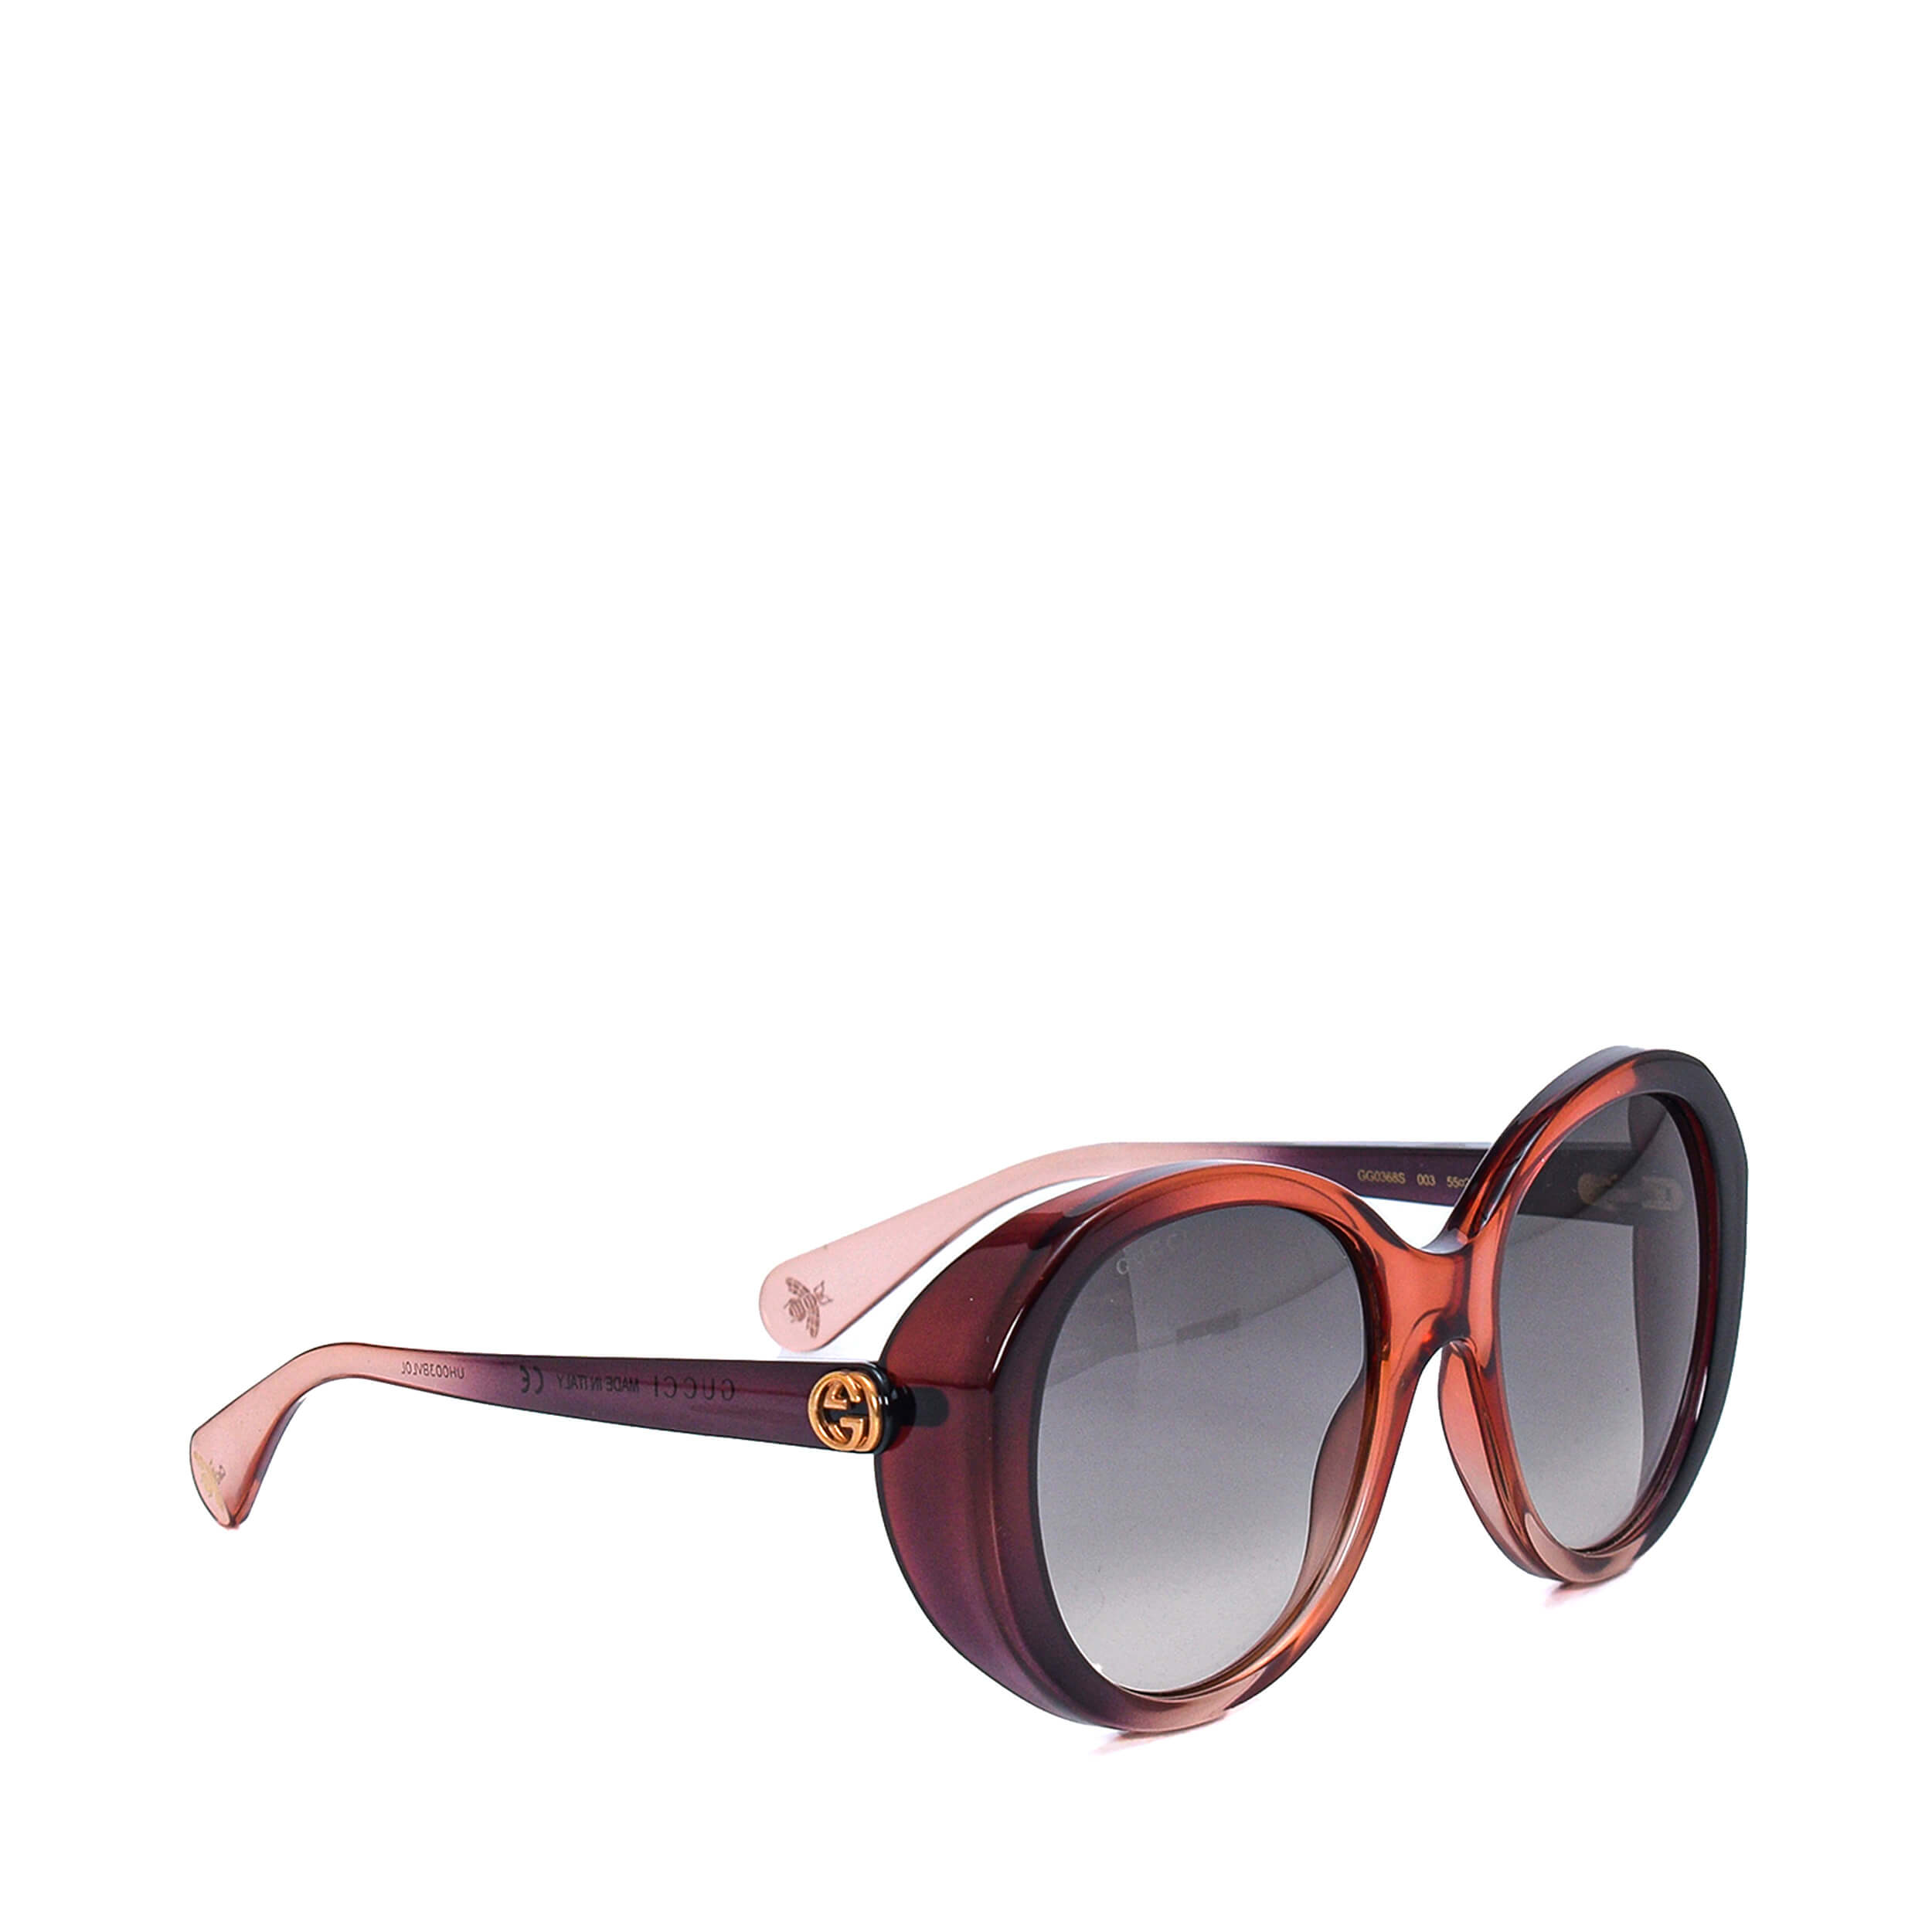 Gucci - Bordeaux Degrade Acetate Sunglasses 